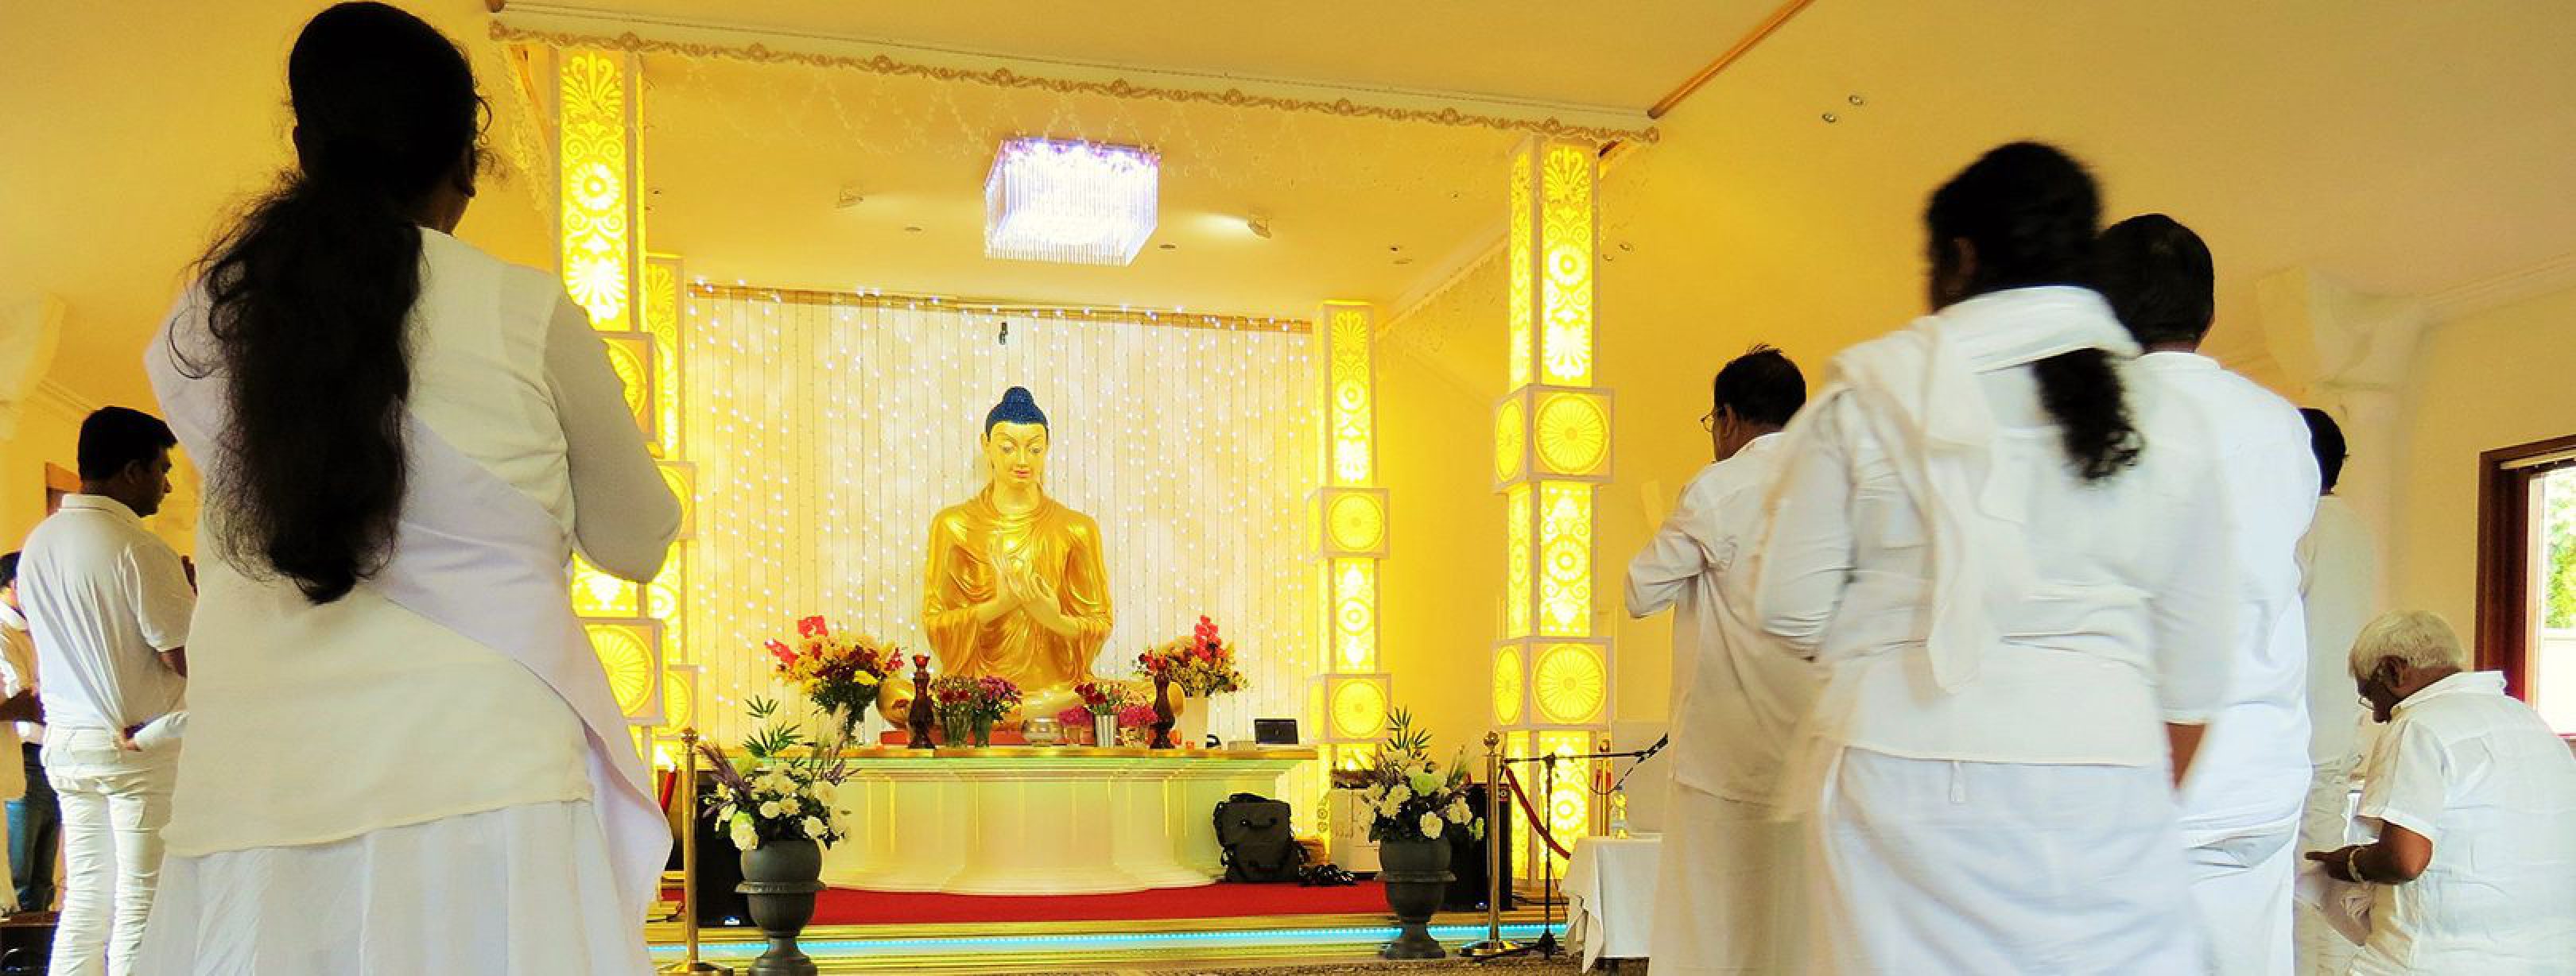 Sri lankaans boeddhisme